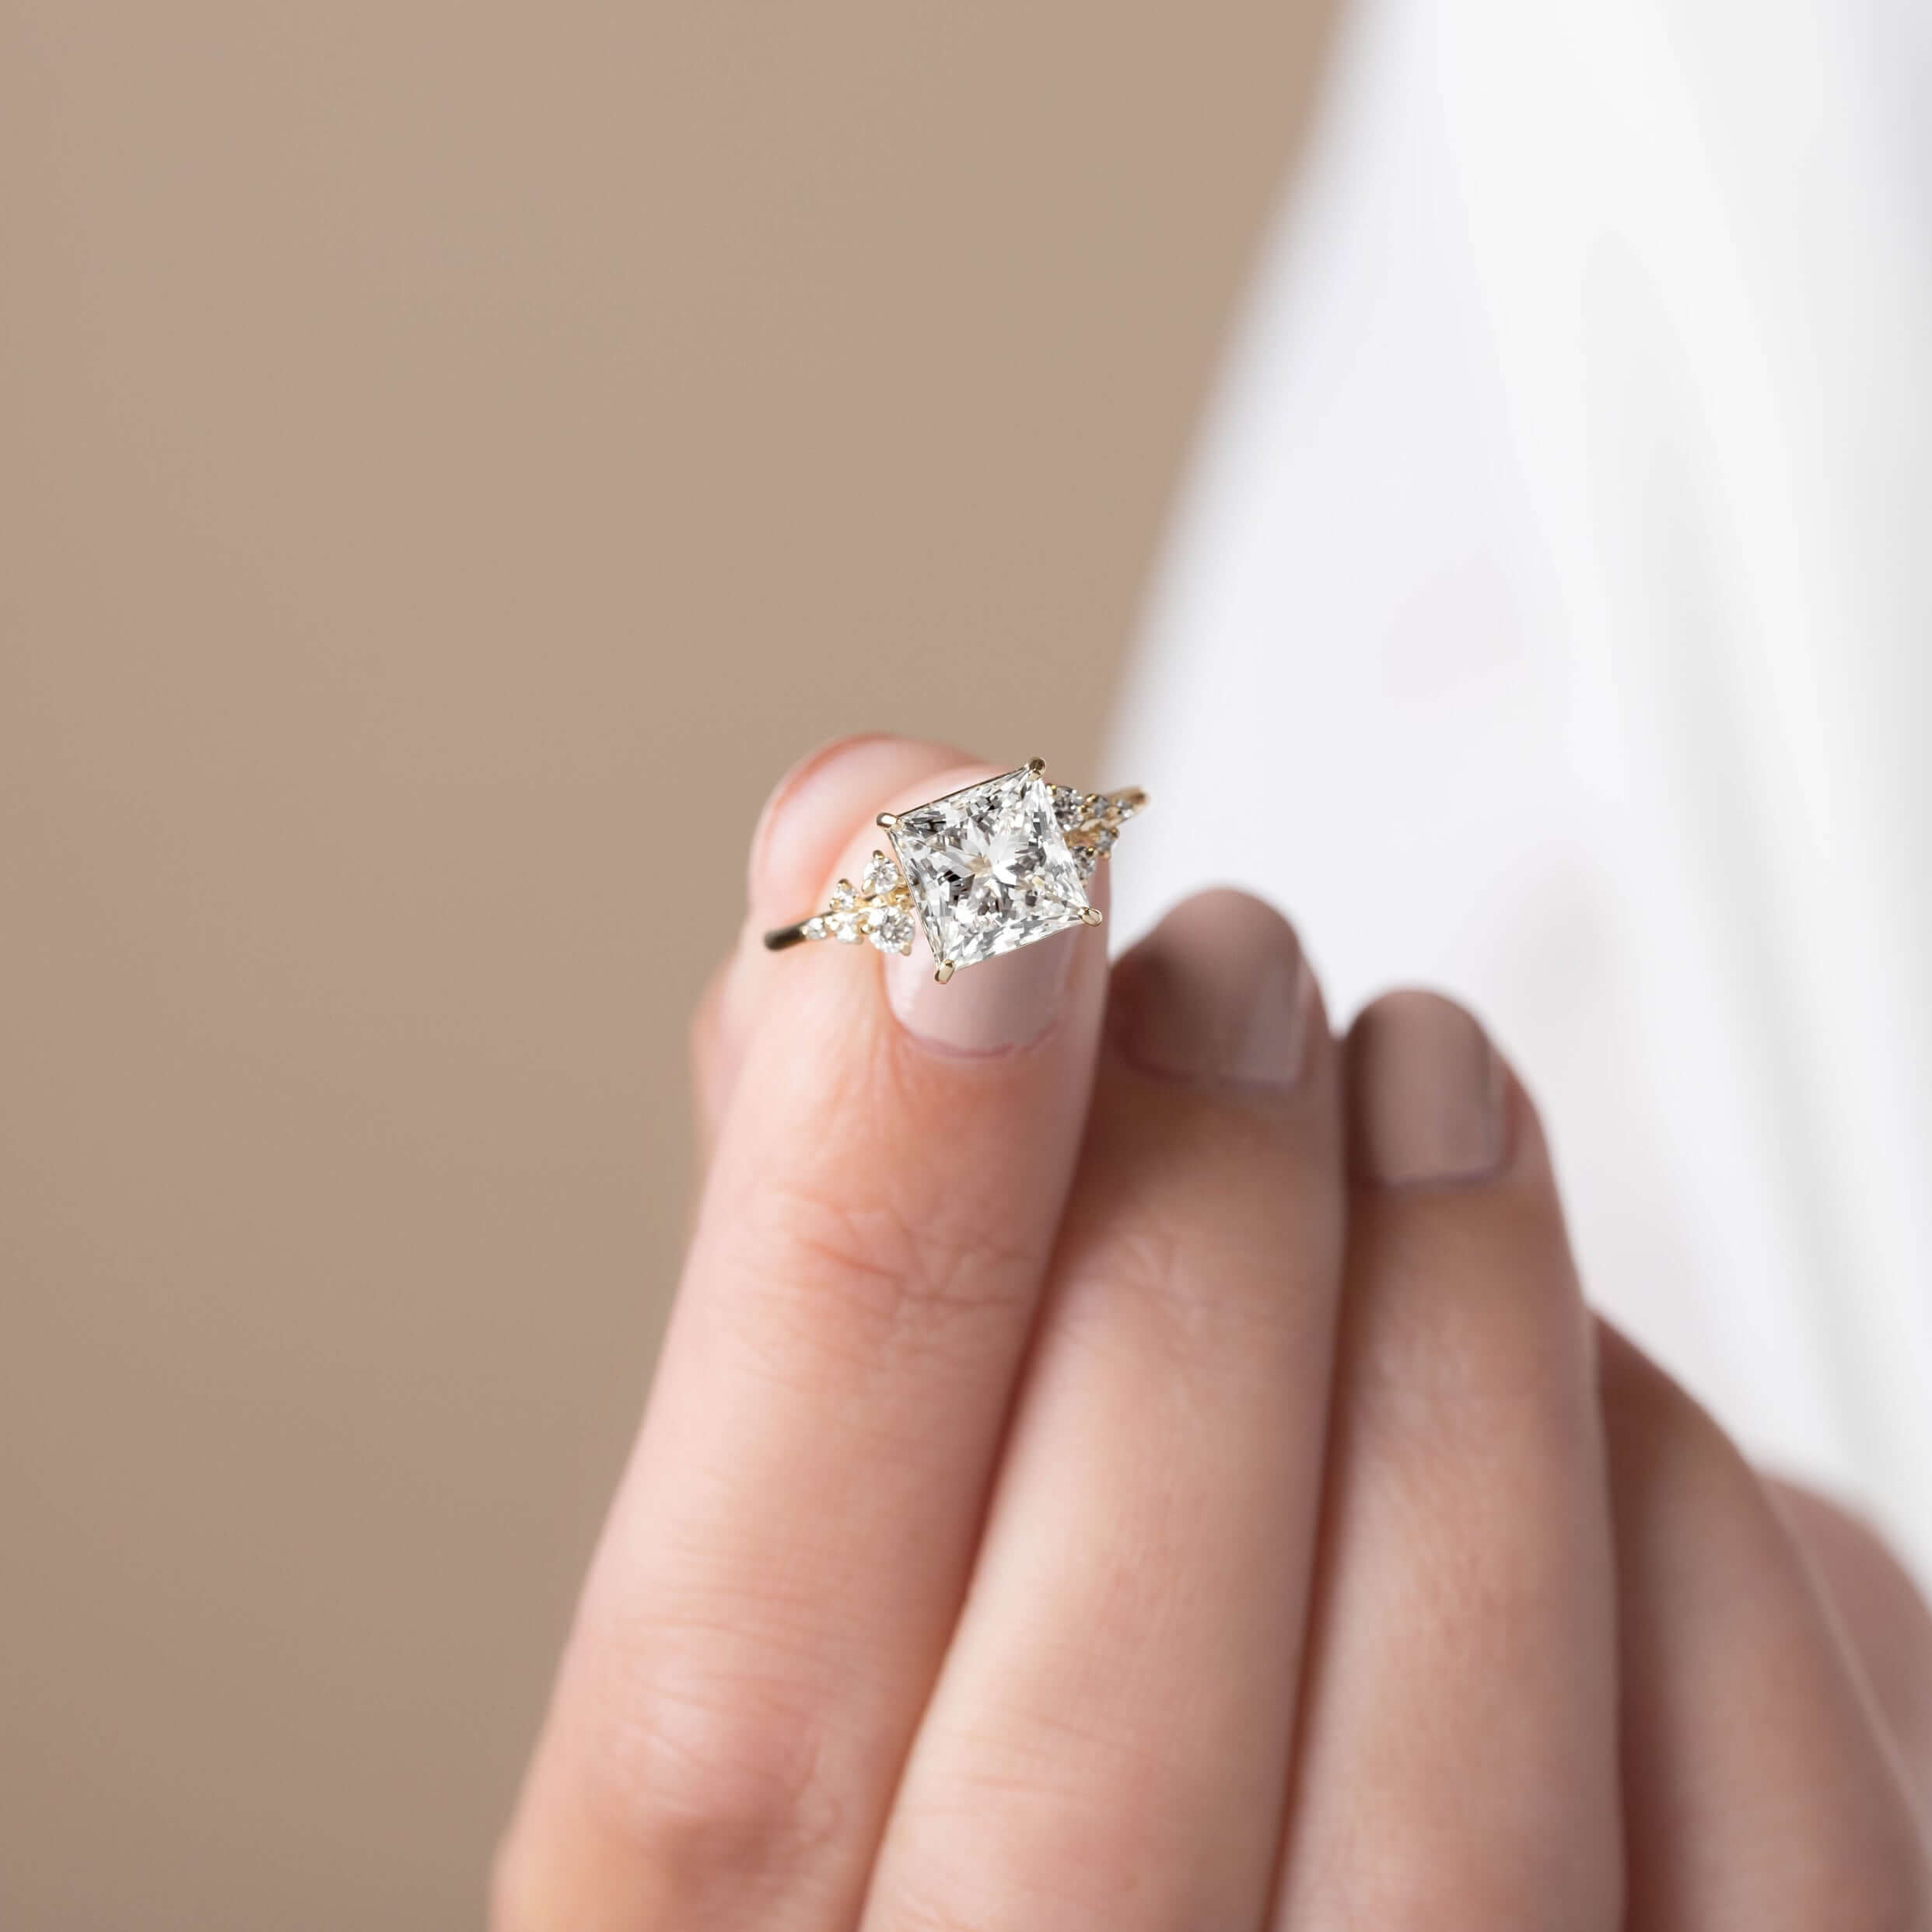 Melanie Casey Snowdrift Handcrafted Engagement Ring